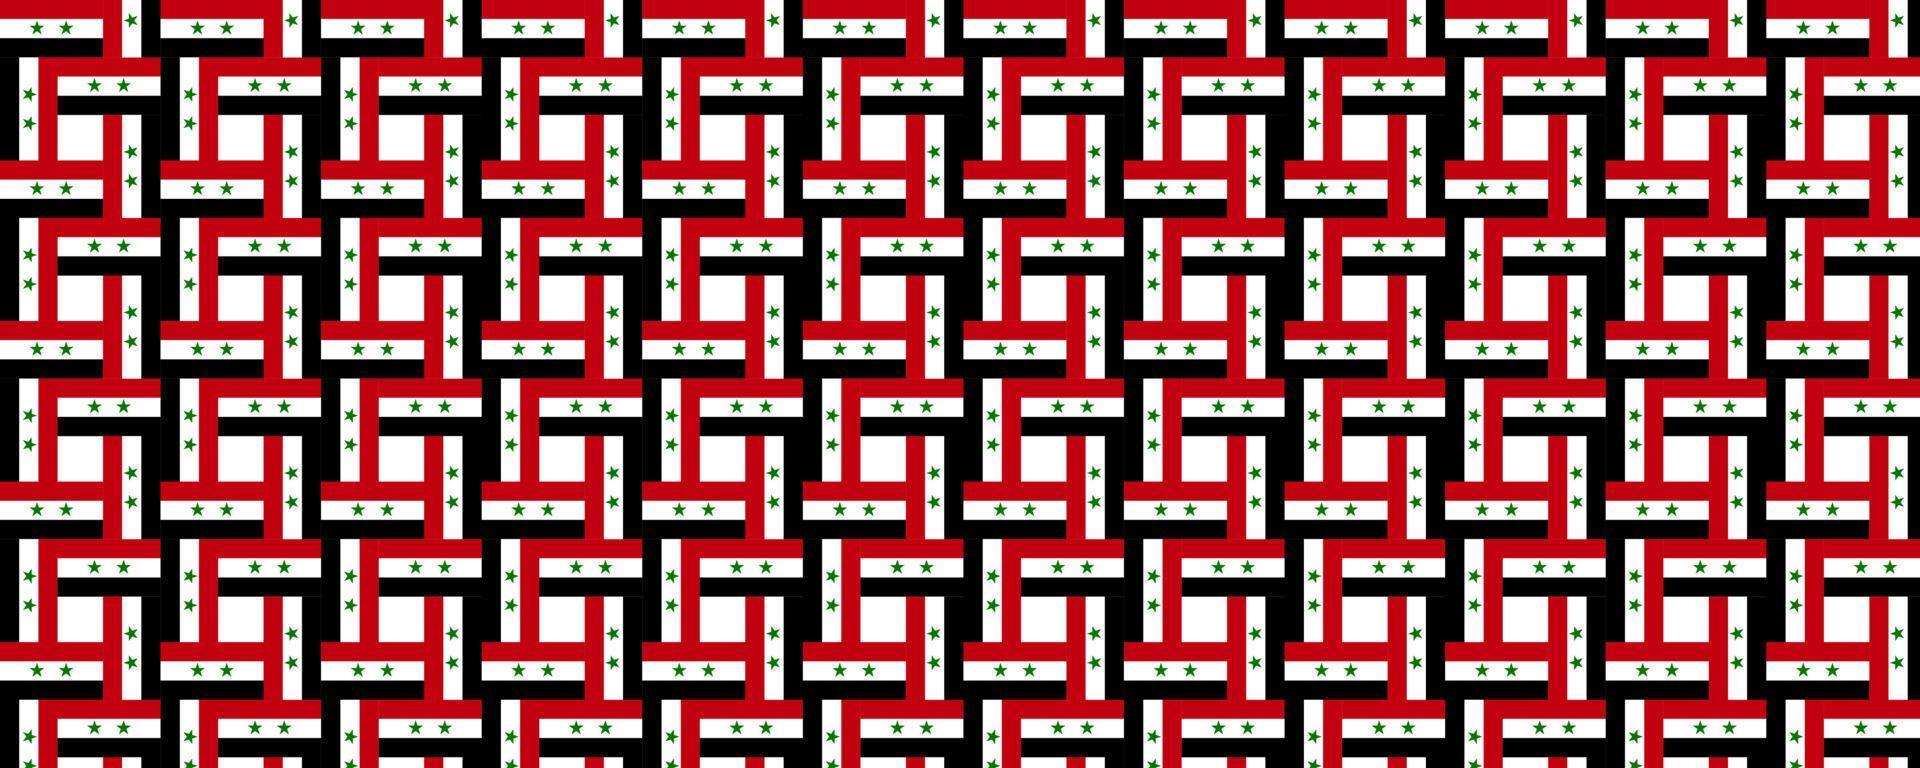 syiria flag pattern vector background